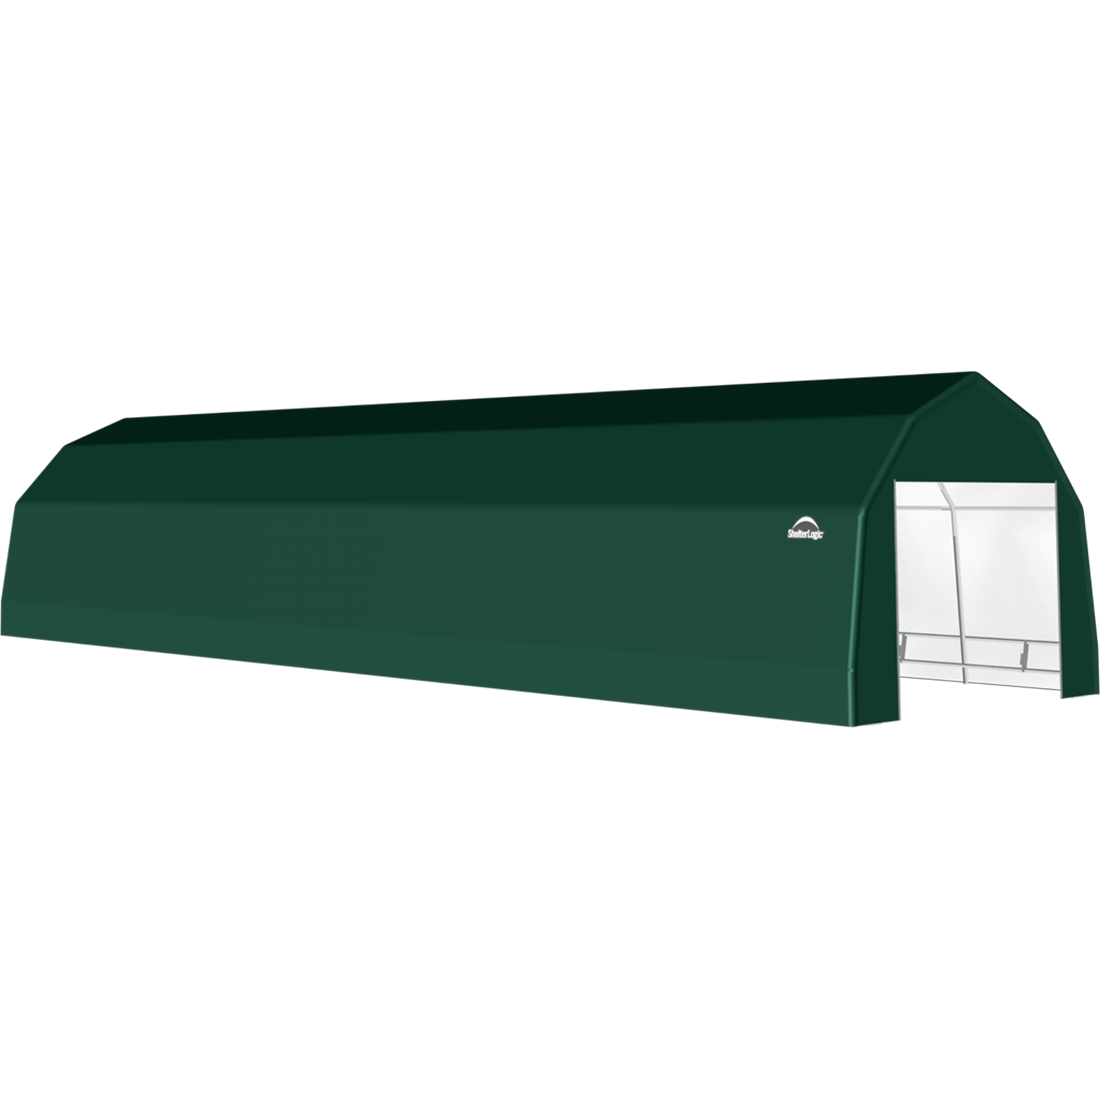 ShelterTech SP Series Barn Shelter, 12 ft. x 32 ft. x 9 ft. Heavy Duty PVC 14.5 oz. Green